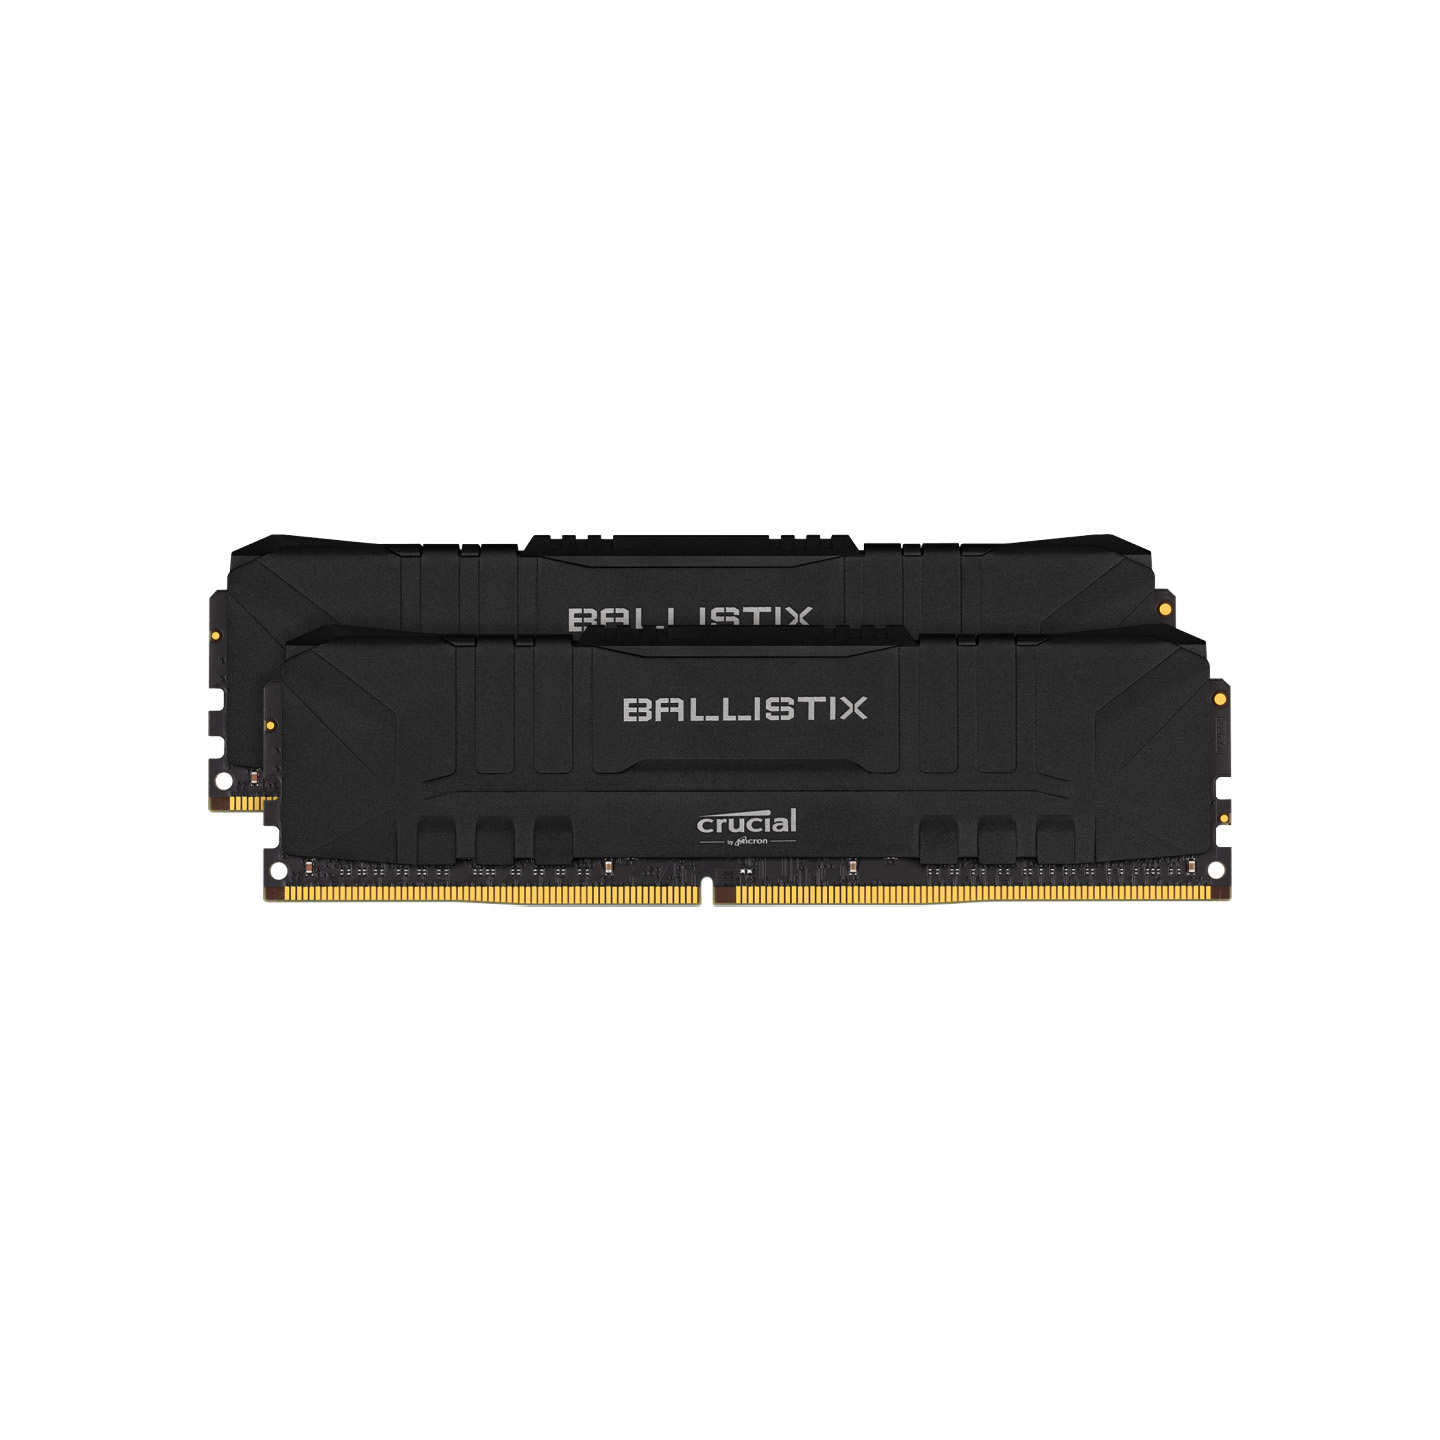 Ballistix Crucial BL2K16G30C15U4B 2x16GB (32GB Kit) DDR4 3000MT/s CL15 Unbuffered DIMM 288pin Black RGB RAM